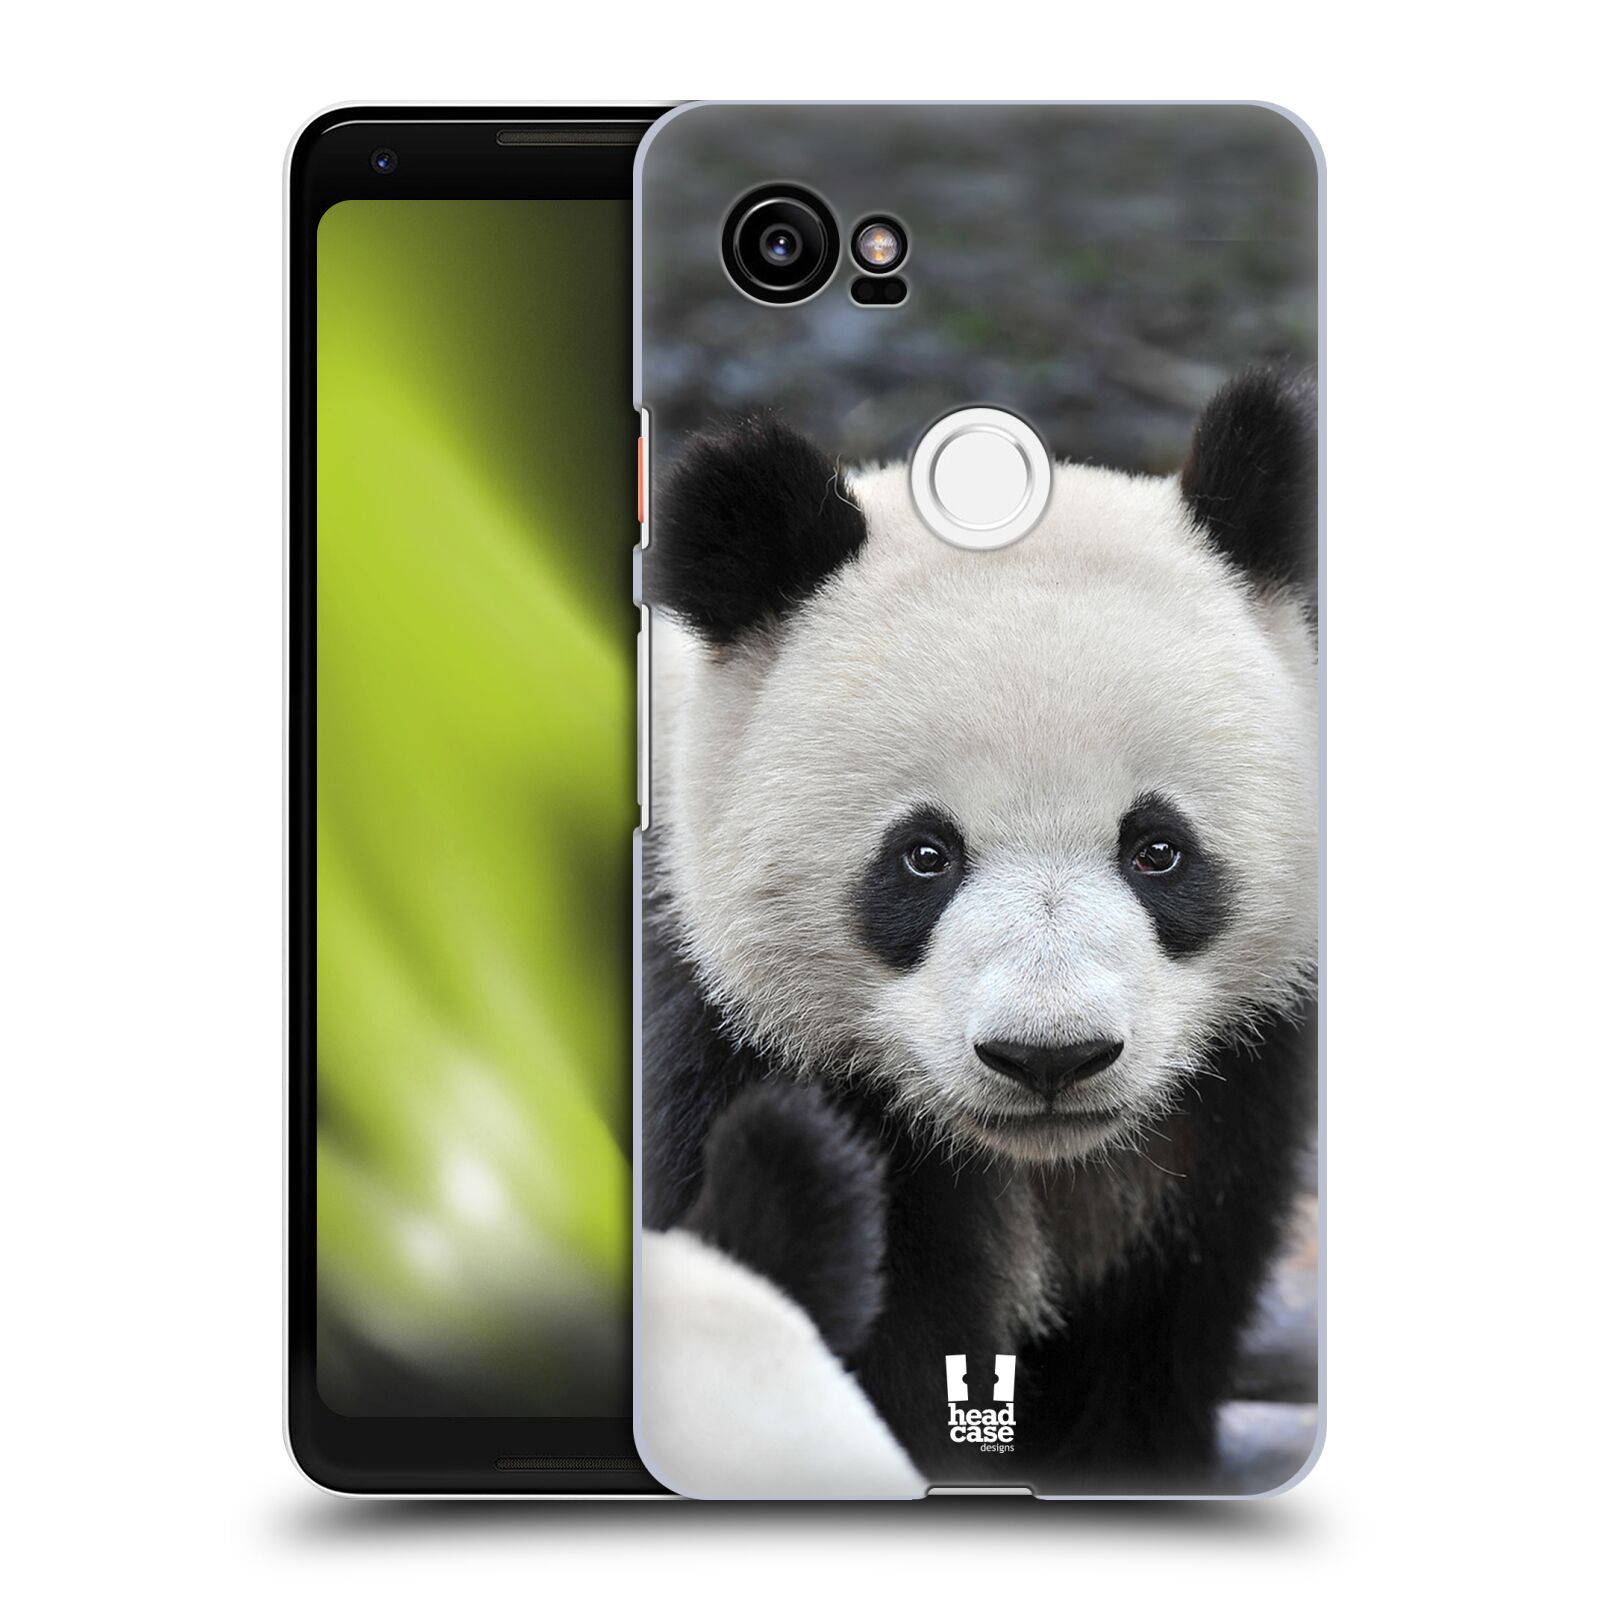 HEAD CASE plastový obal na mobil Google Pixel 2 XL vzor Divočina, Divoký život a zvířata foto MEDVĚD PANDA